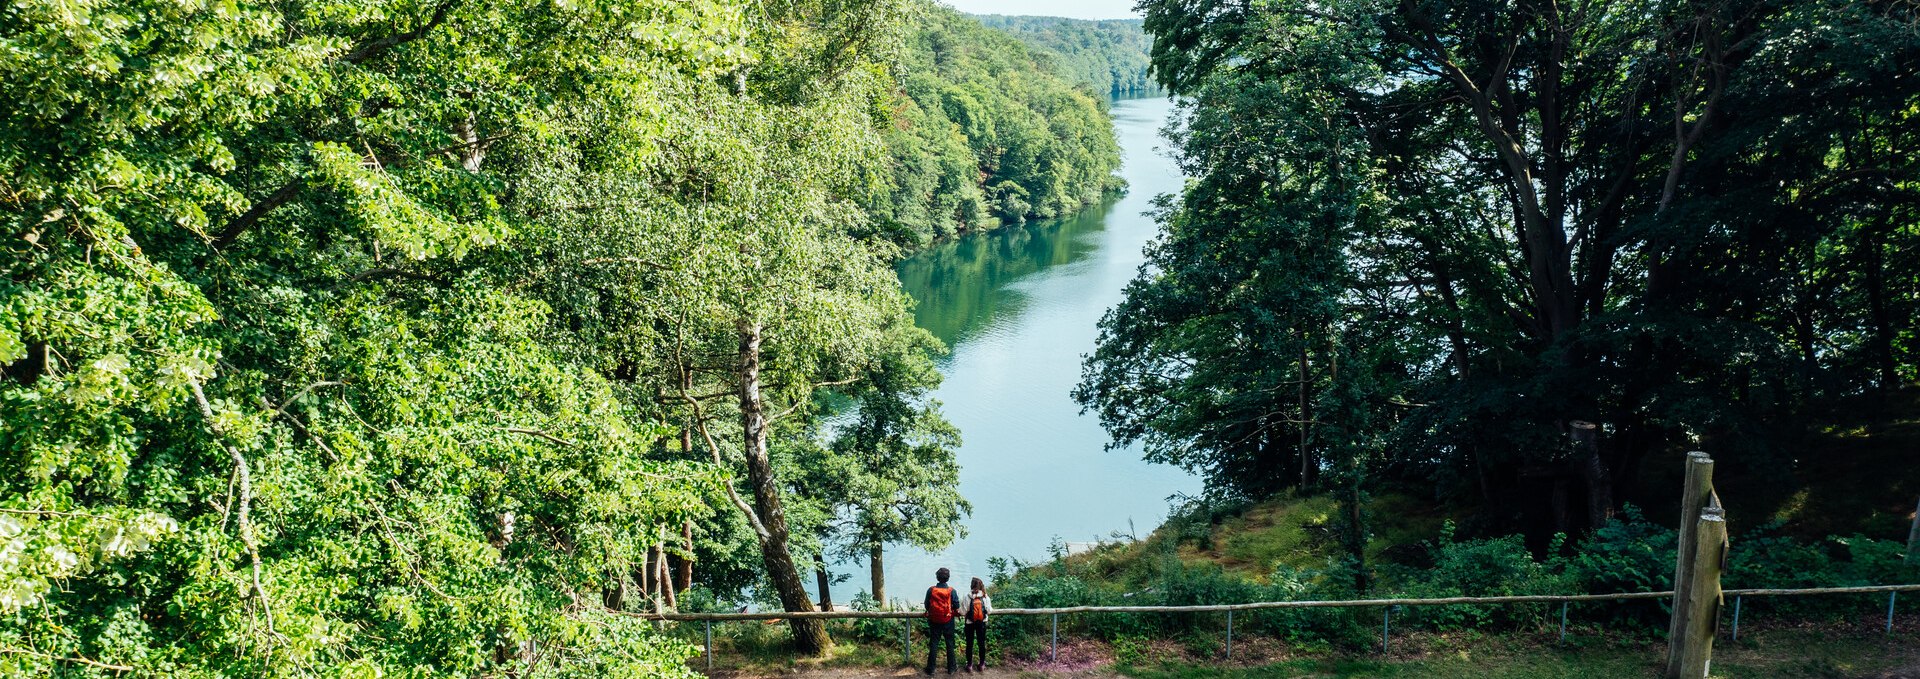 Hiking on the Nature Park Trail along the Narrow Luzin River, © TMV/Gänsicke